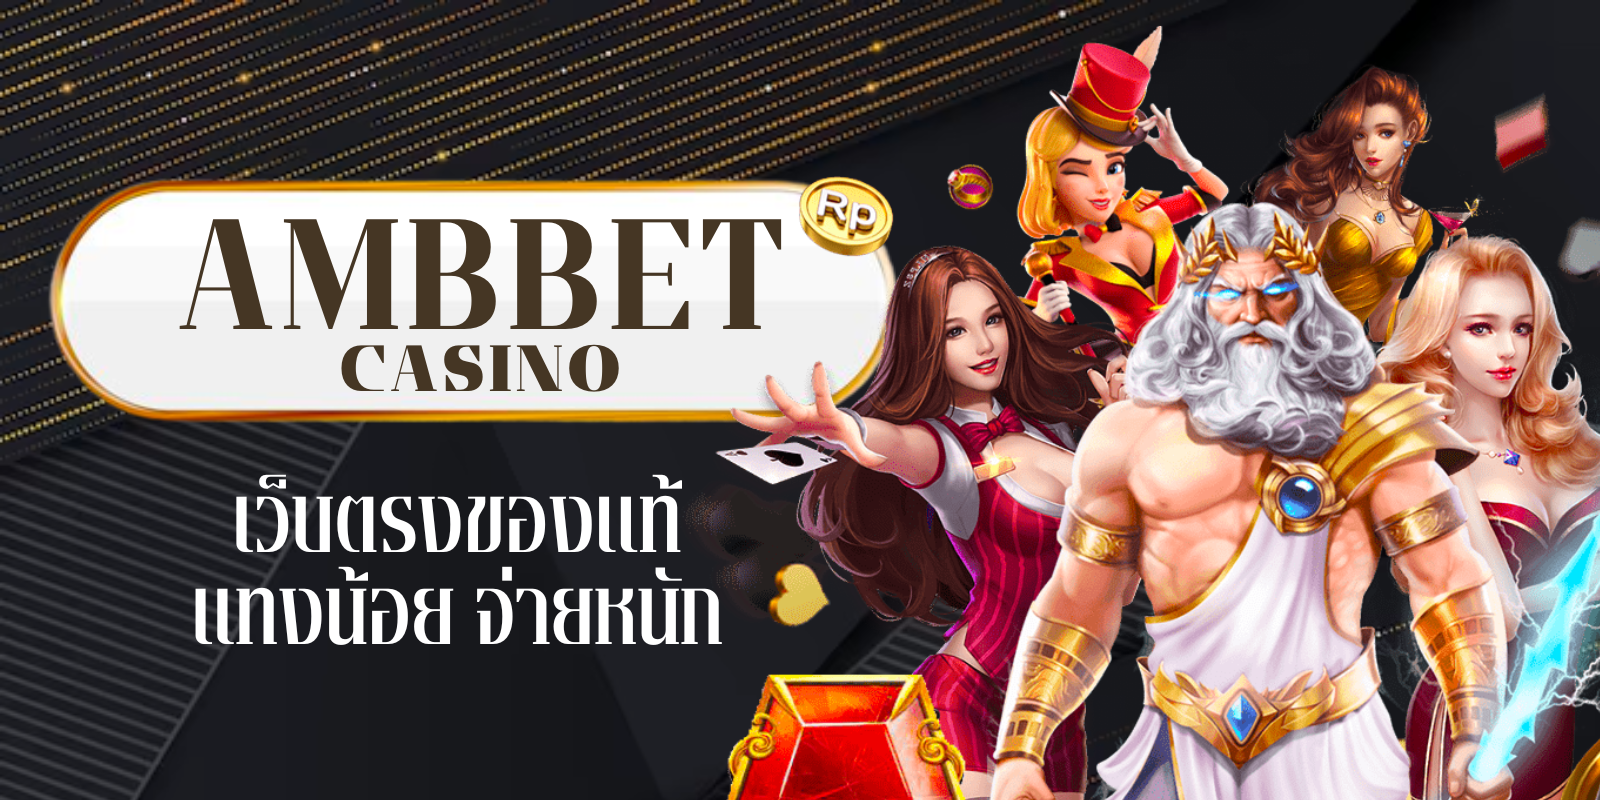 ambbet casino เว็บตรงของแท้ แทงน้อย จ่ายหนัก